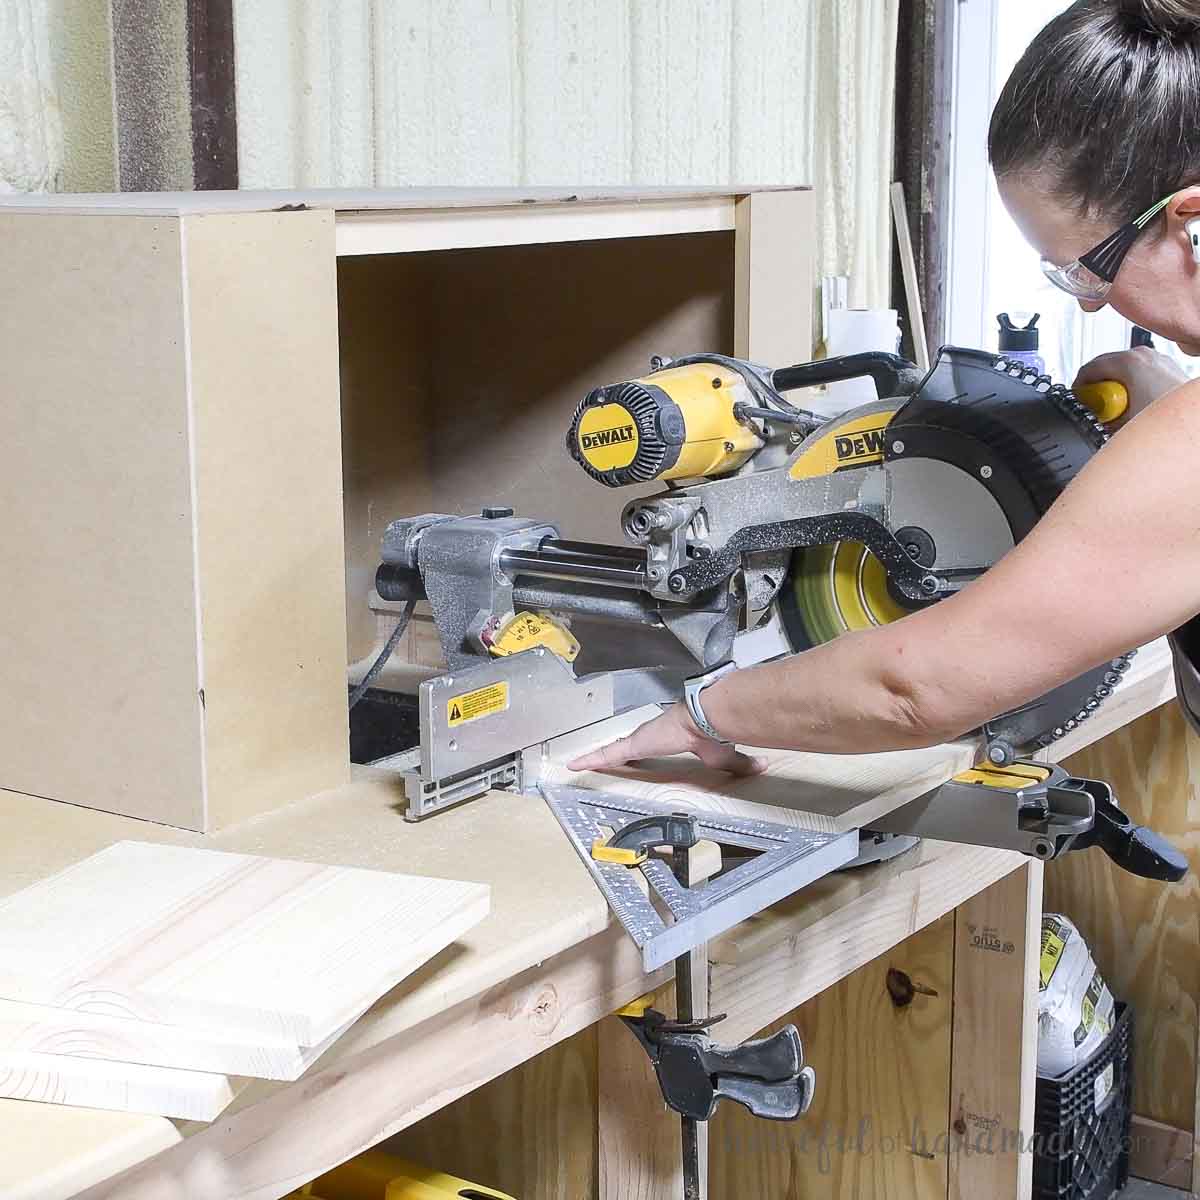 Cutting 1x12 boards on a miter saw.